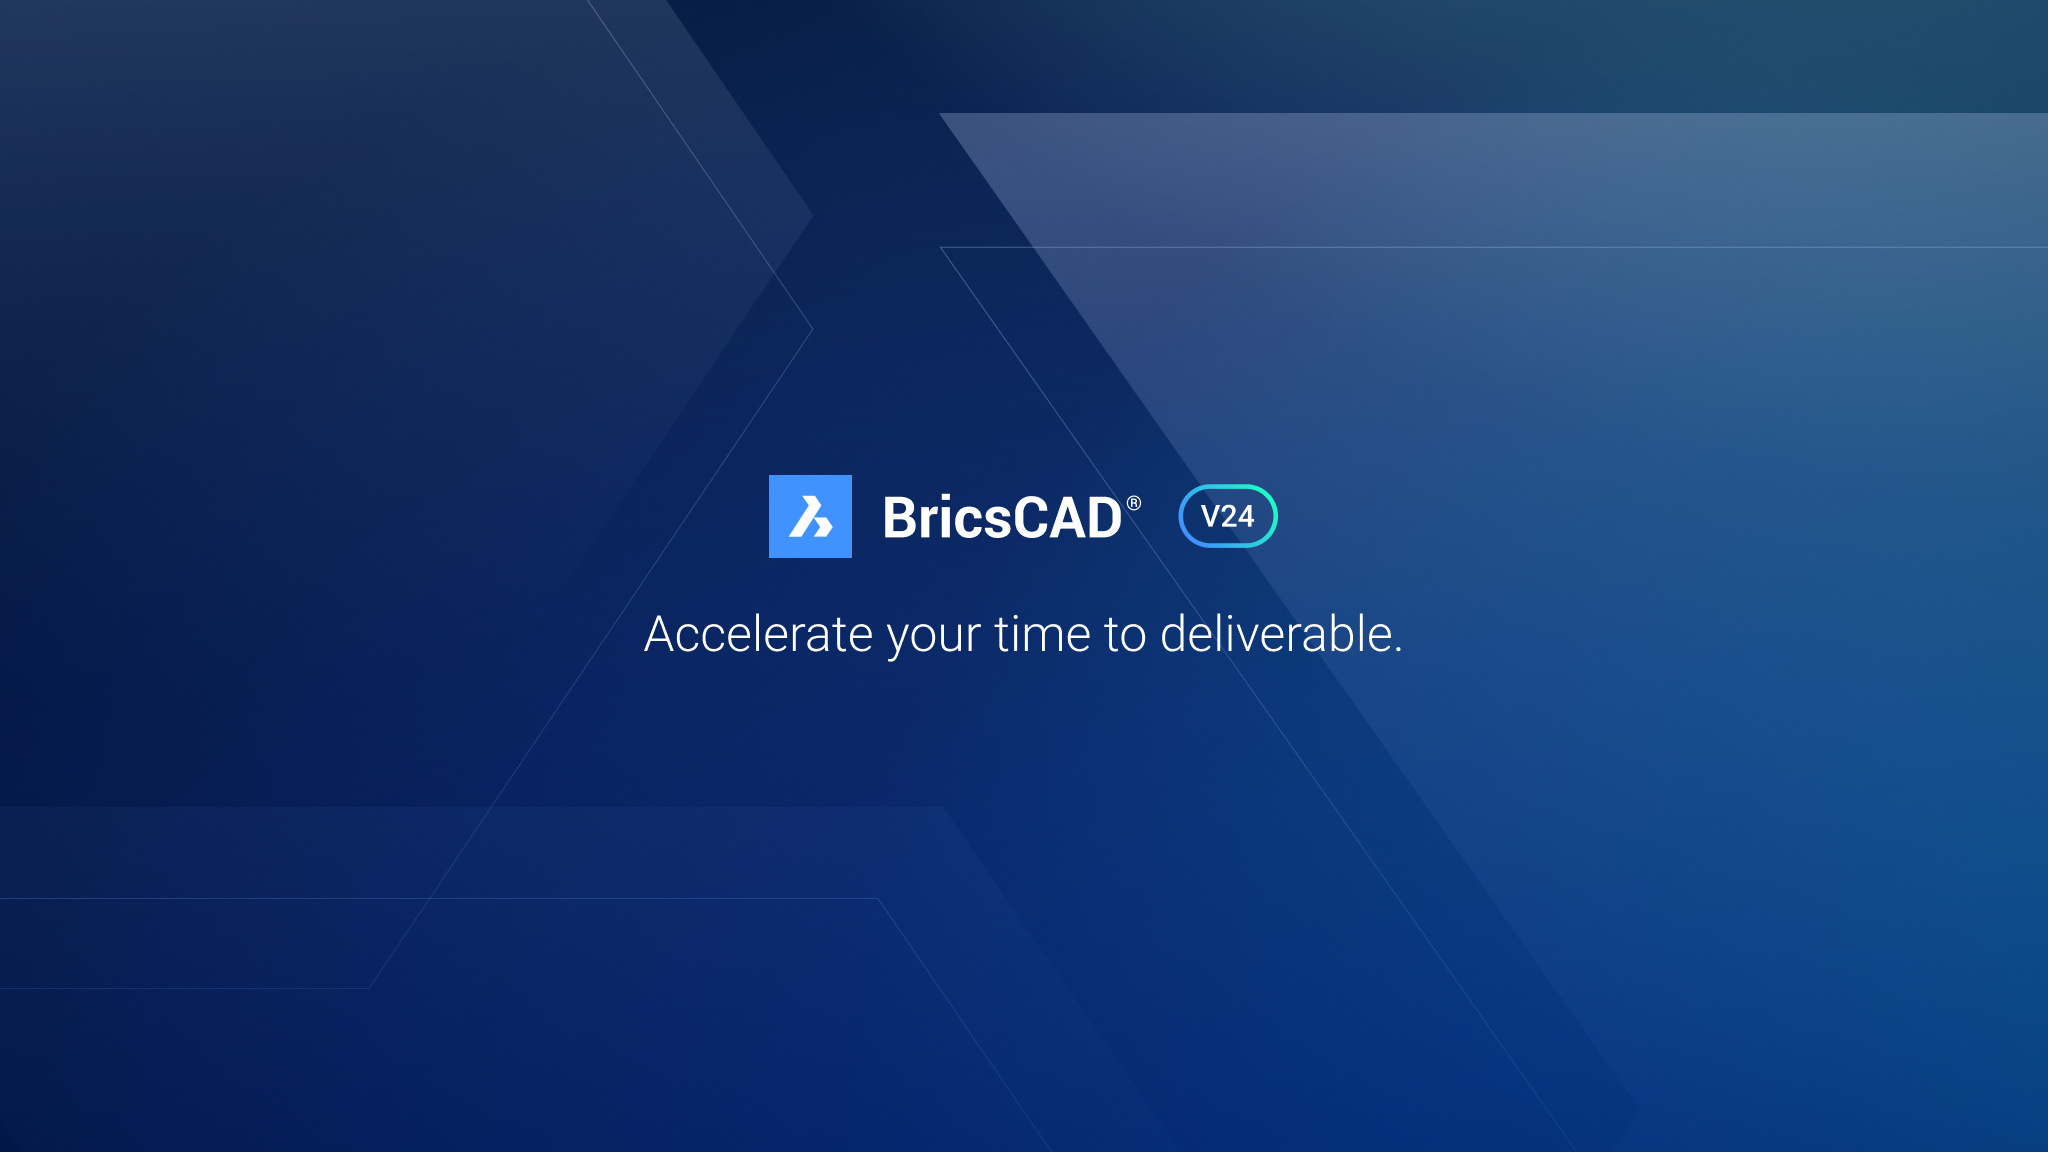 BricsCAD V24 Accelerate Image